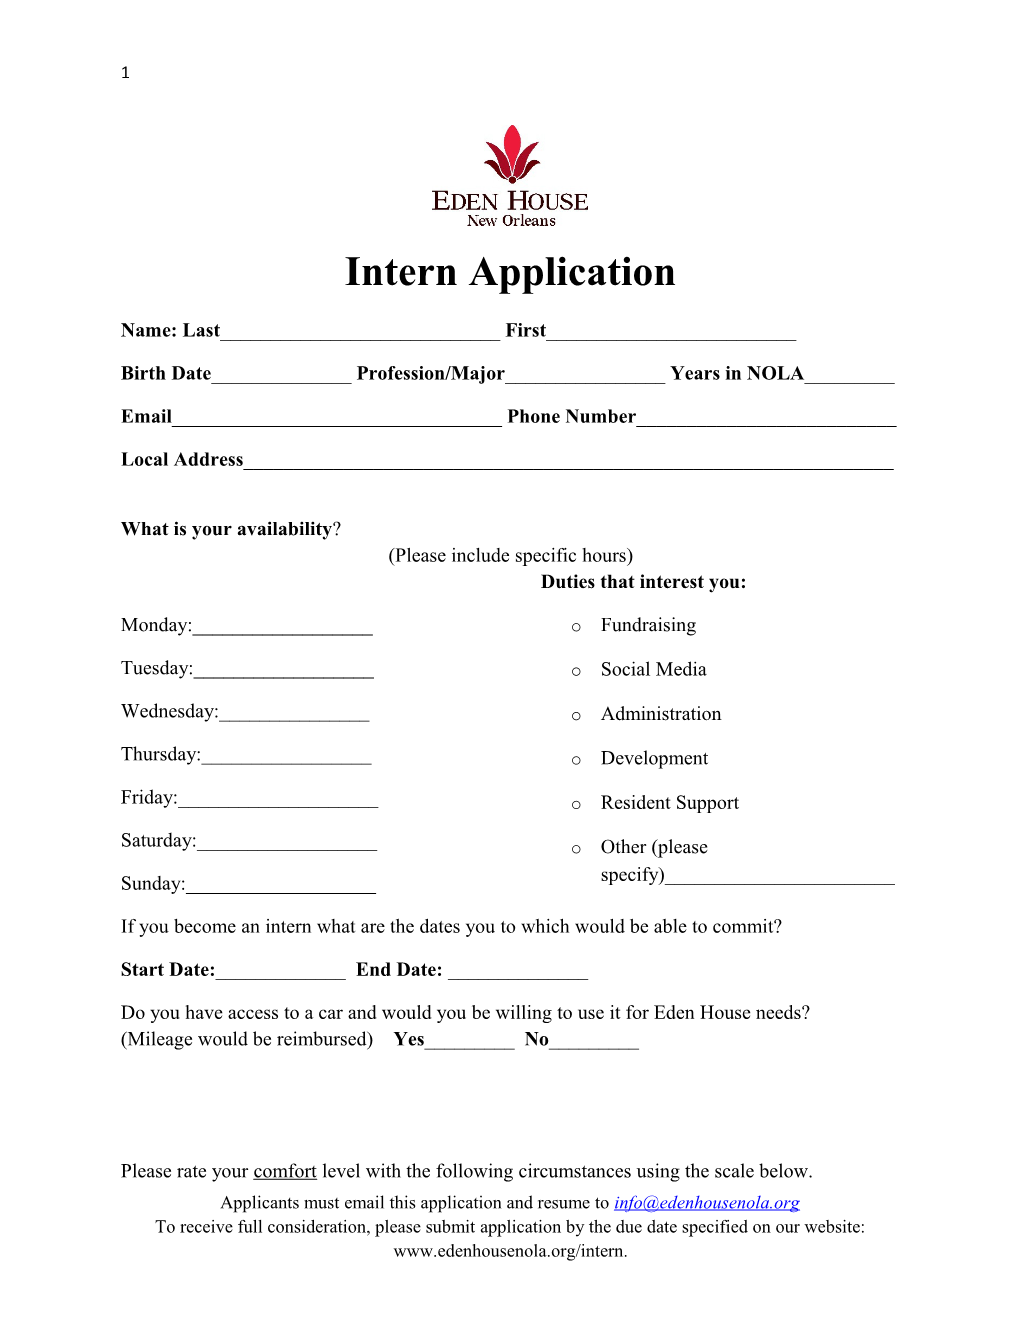 Intern Application